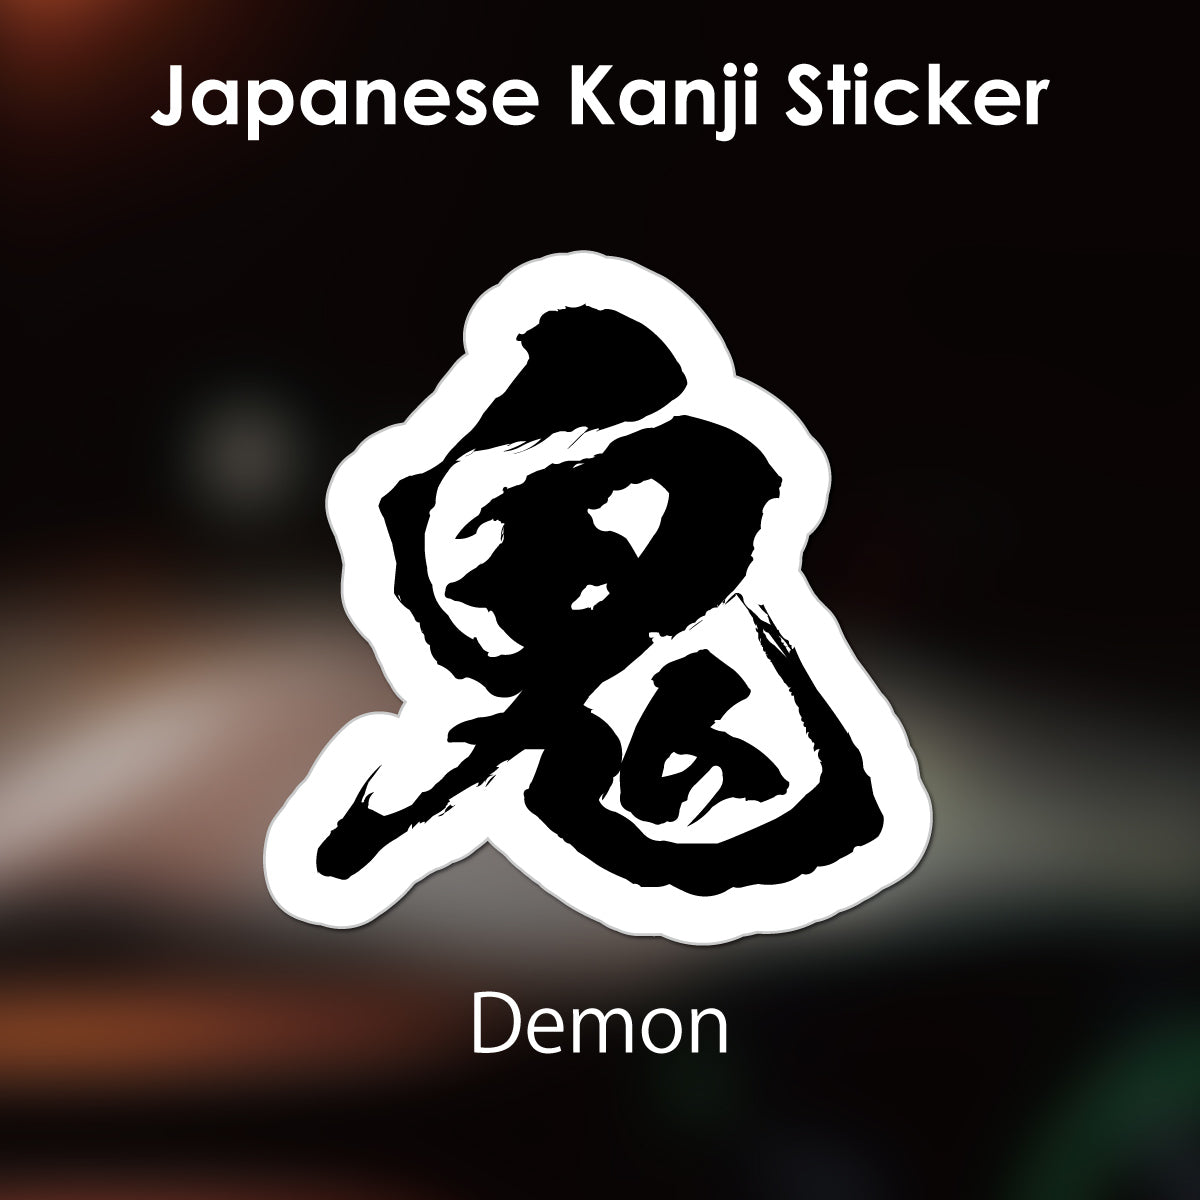 Japanese Kanji Sticker "Oni/Demon" outlined shape PVC 12.7x13.2cm original design from Japan Retro